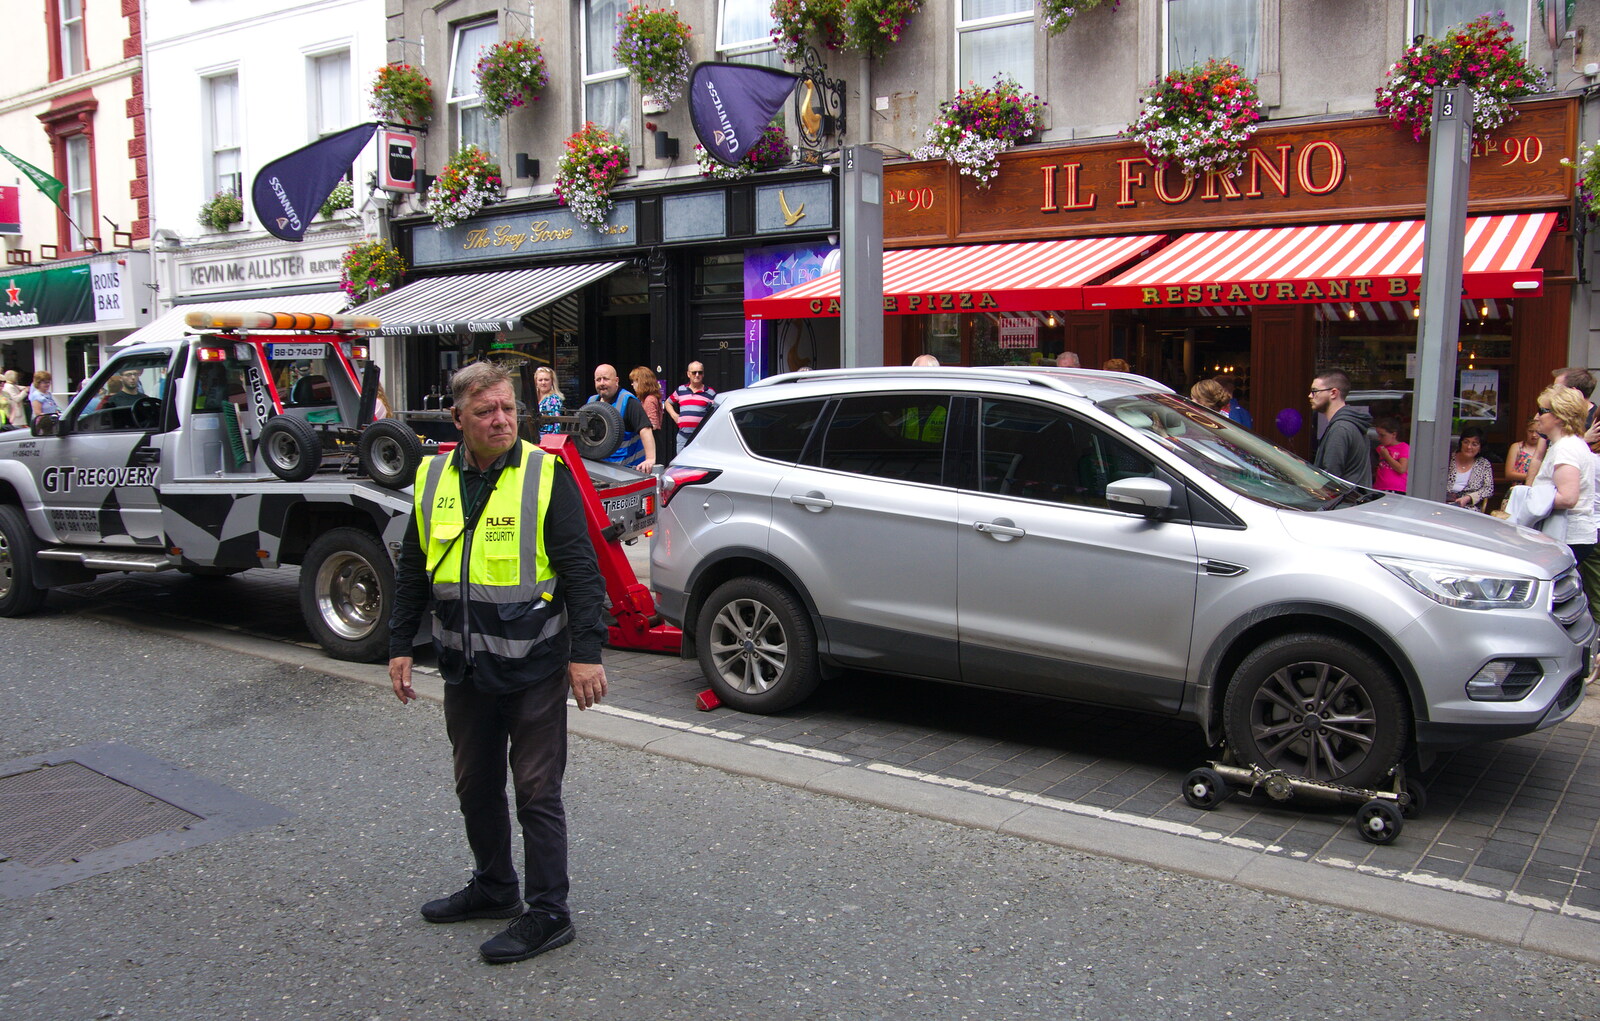 Some dude gets their car hauled off from The Fleadh Cheoil na hÉireann, Droichead Átha, Co. Louth, Ireland - 13th August 2019